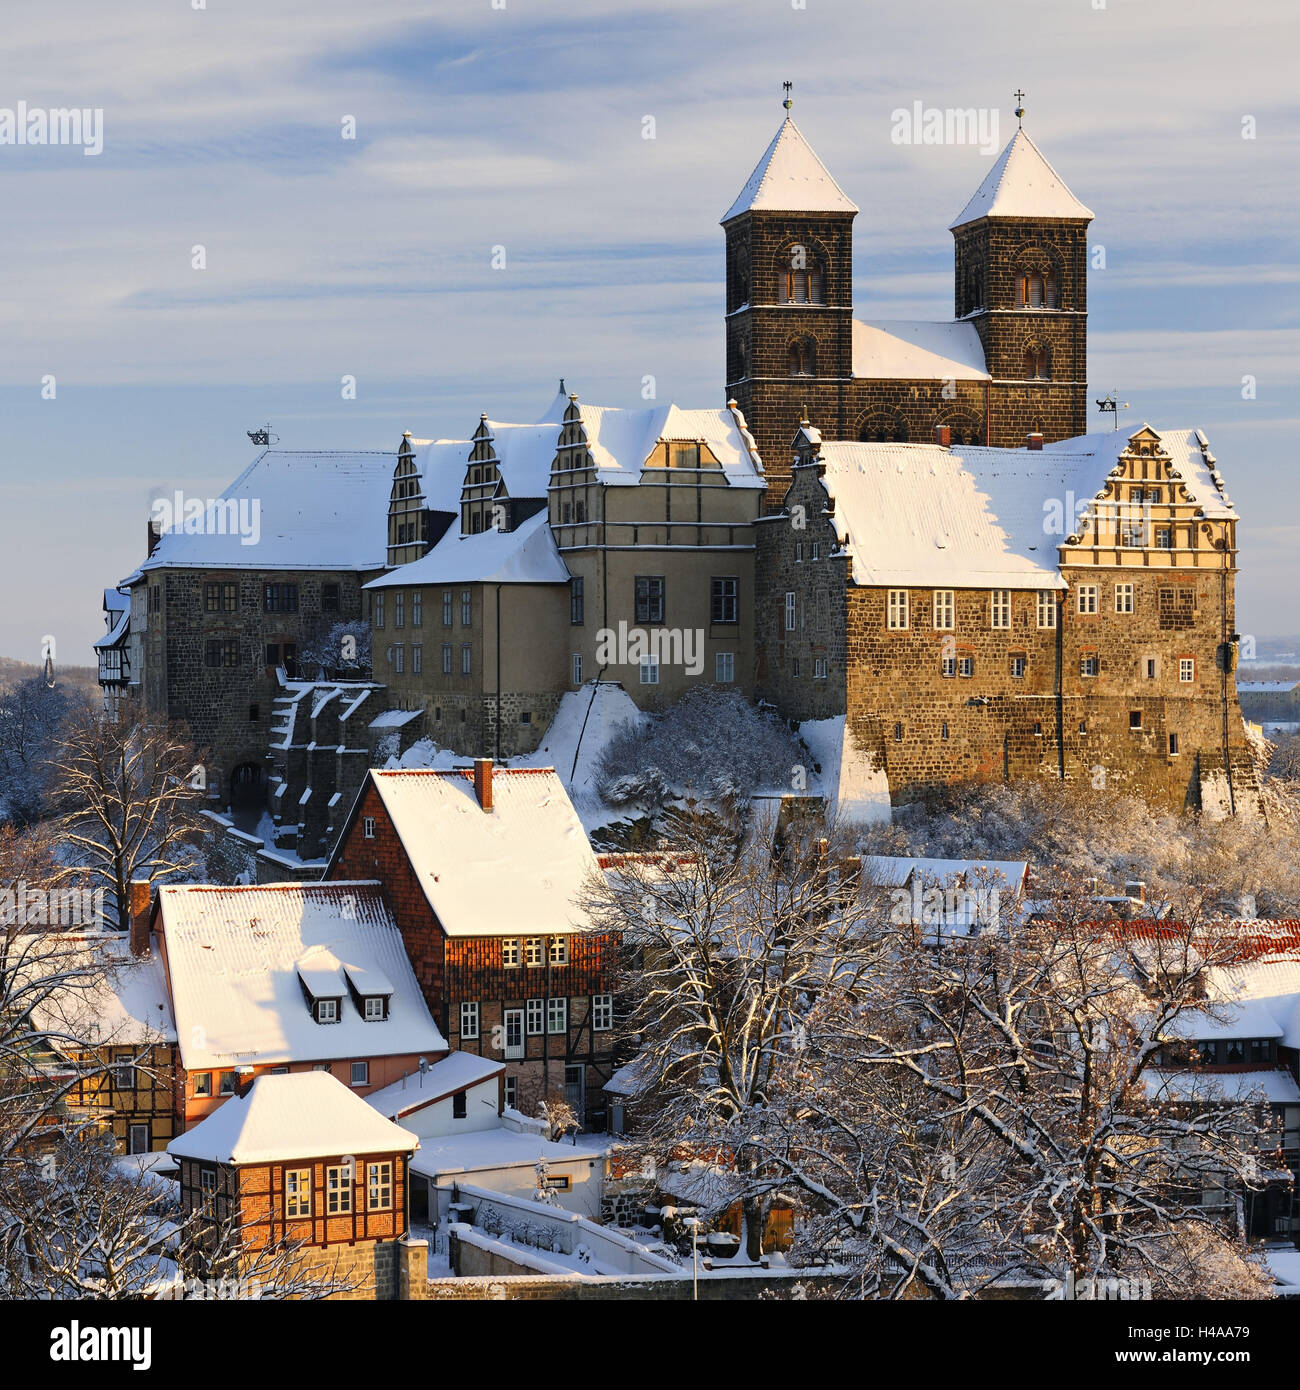 Germany, Saxony-Anhalt, Quedlinburg, winter, Stock Photo